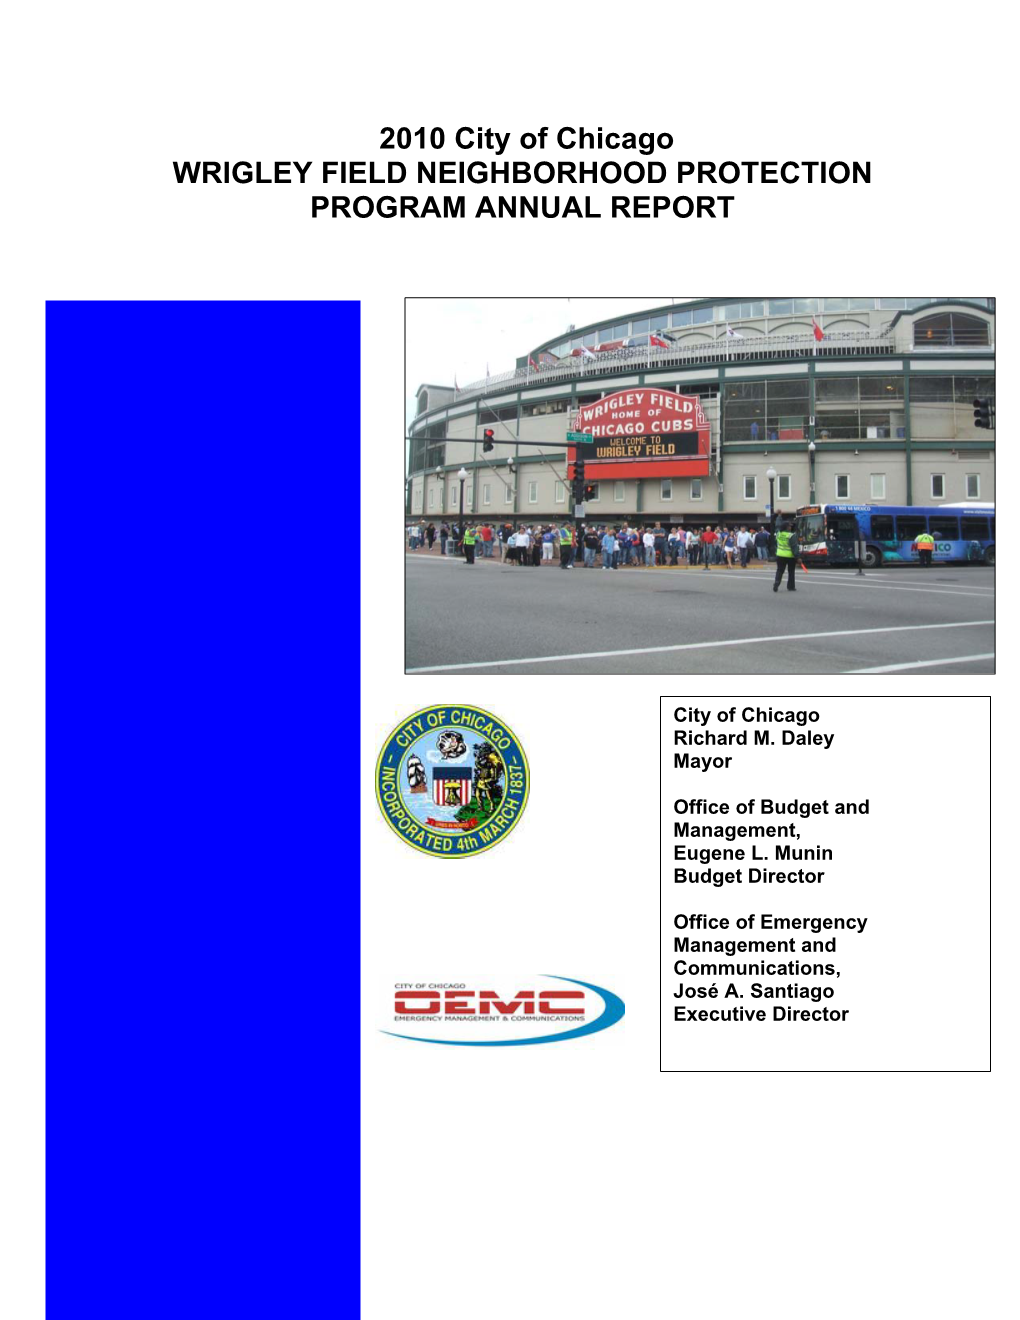 2010 City of Chicago WRIGLEY FIELD NEIGHBORHOOD PROTECTION PROGRAM ANNUAL REPORT